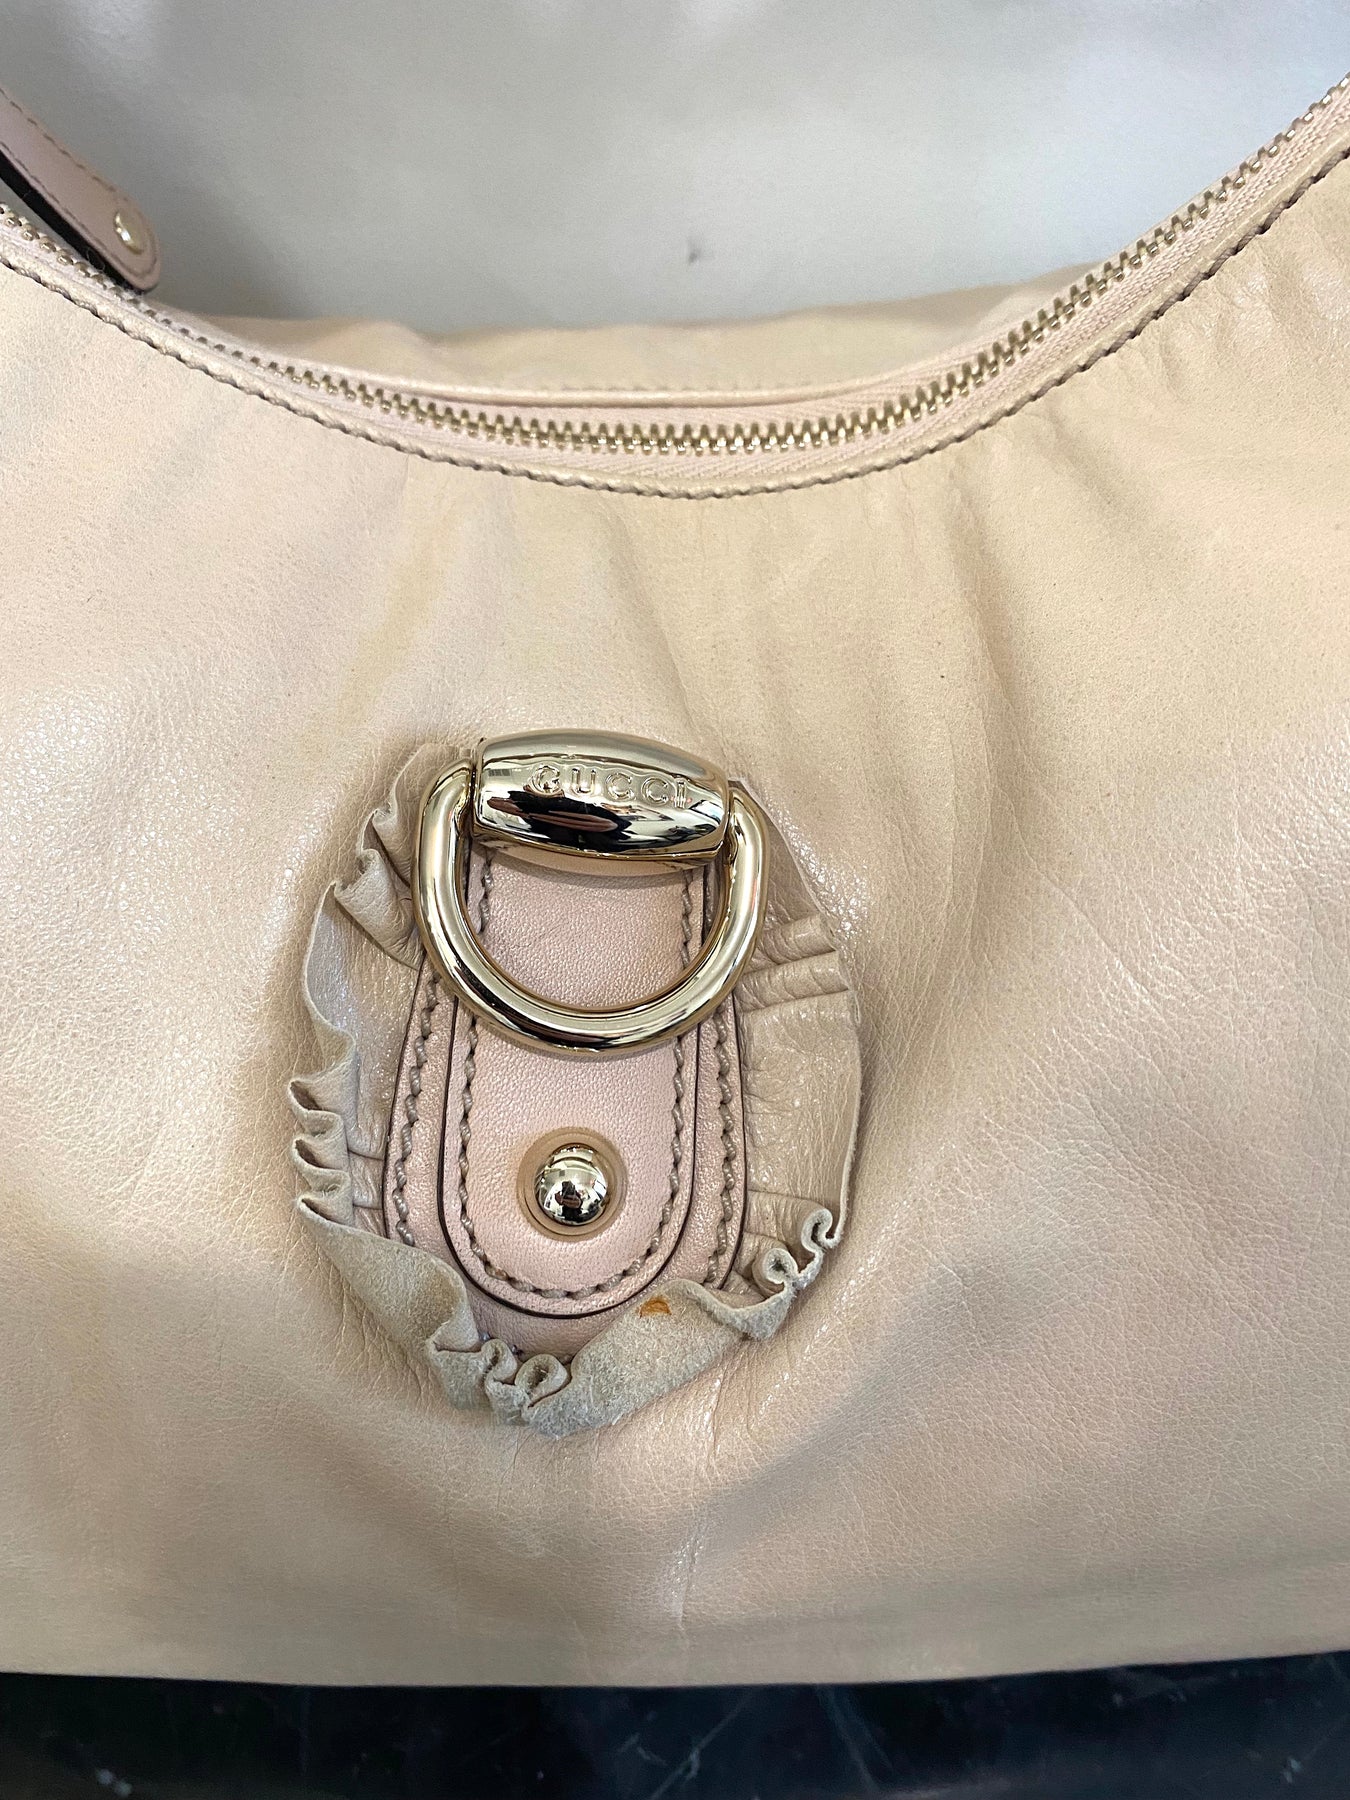 Gucci Leather Sabrina Hobo Bag - Neutrals Hobos, Handbags